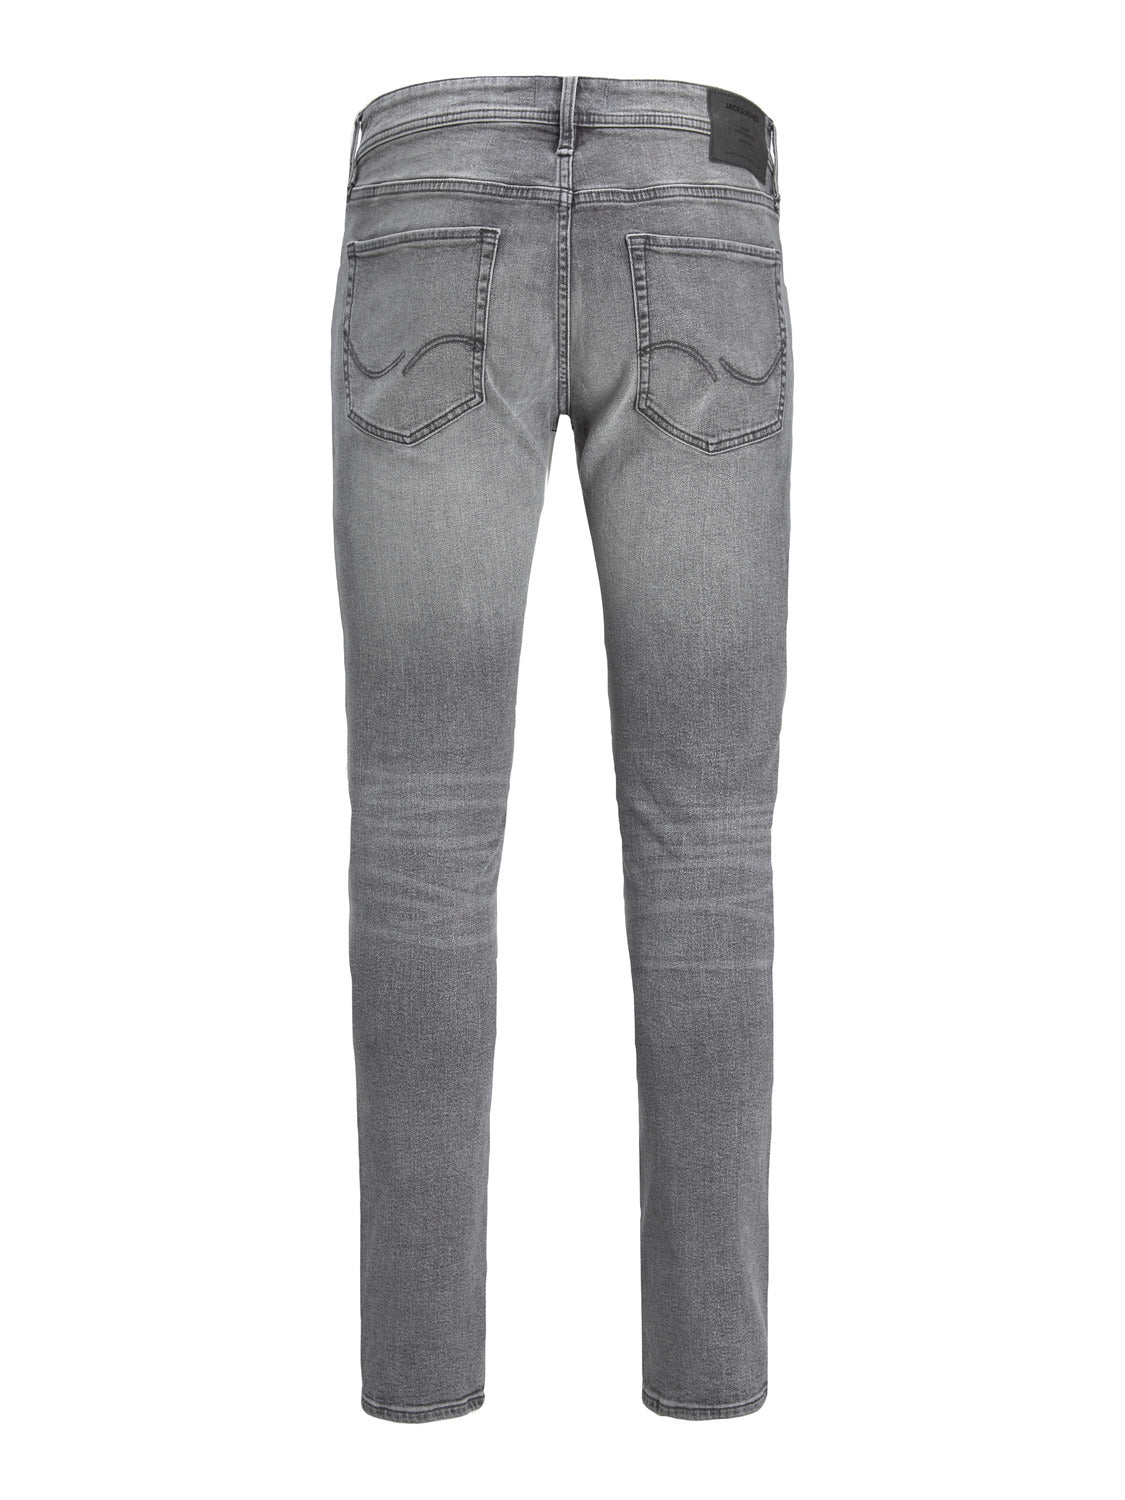 JJIGLENN Jeans - Grey Denim